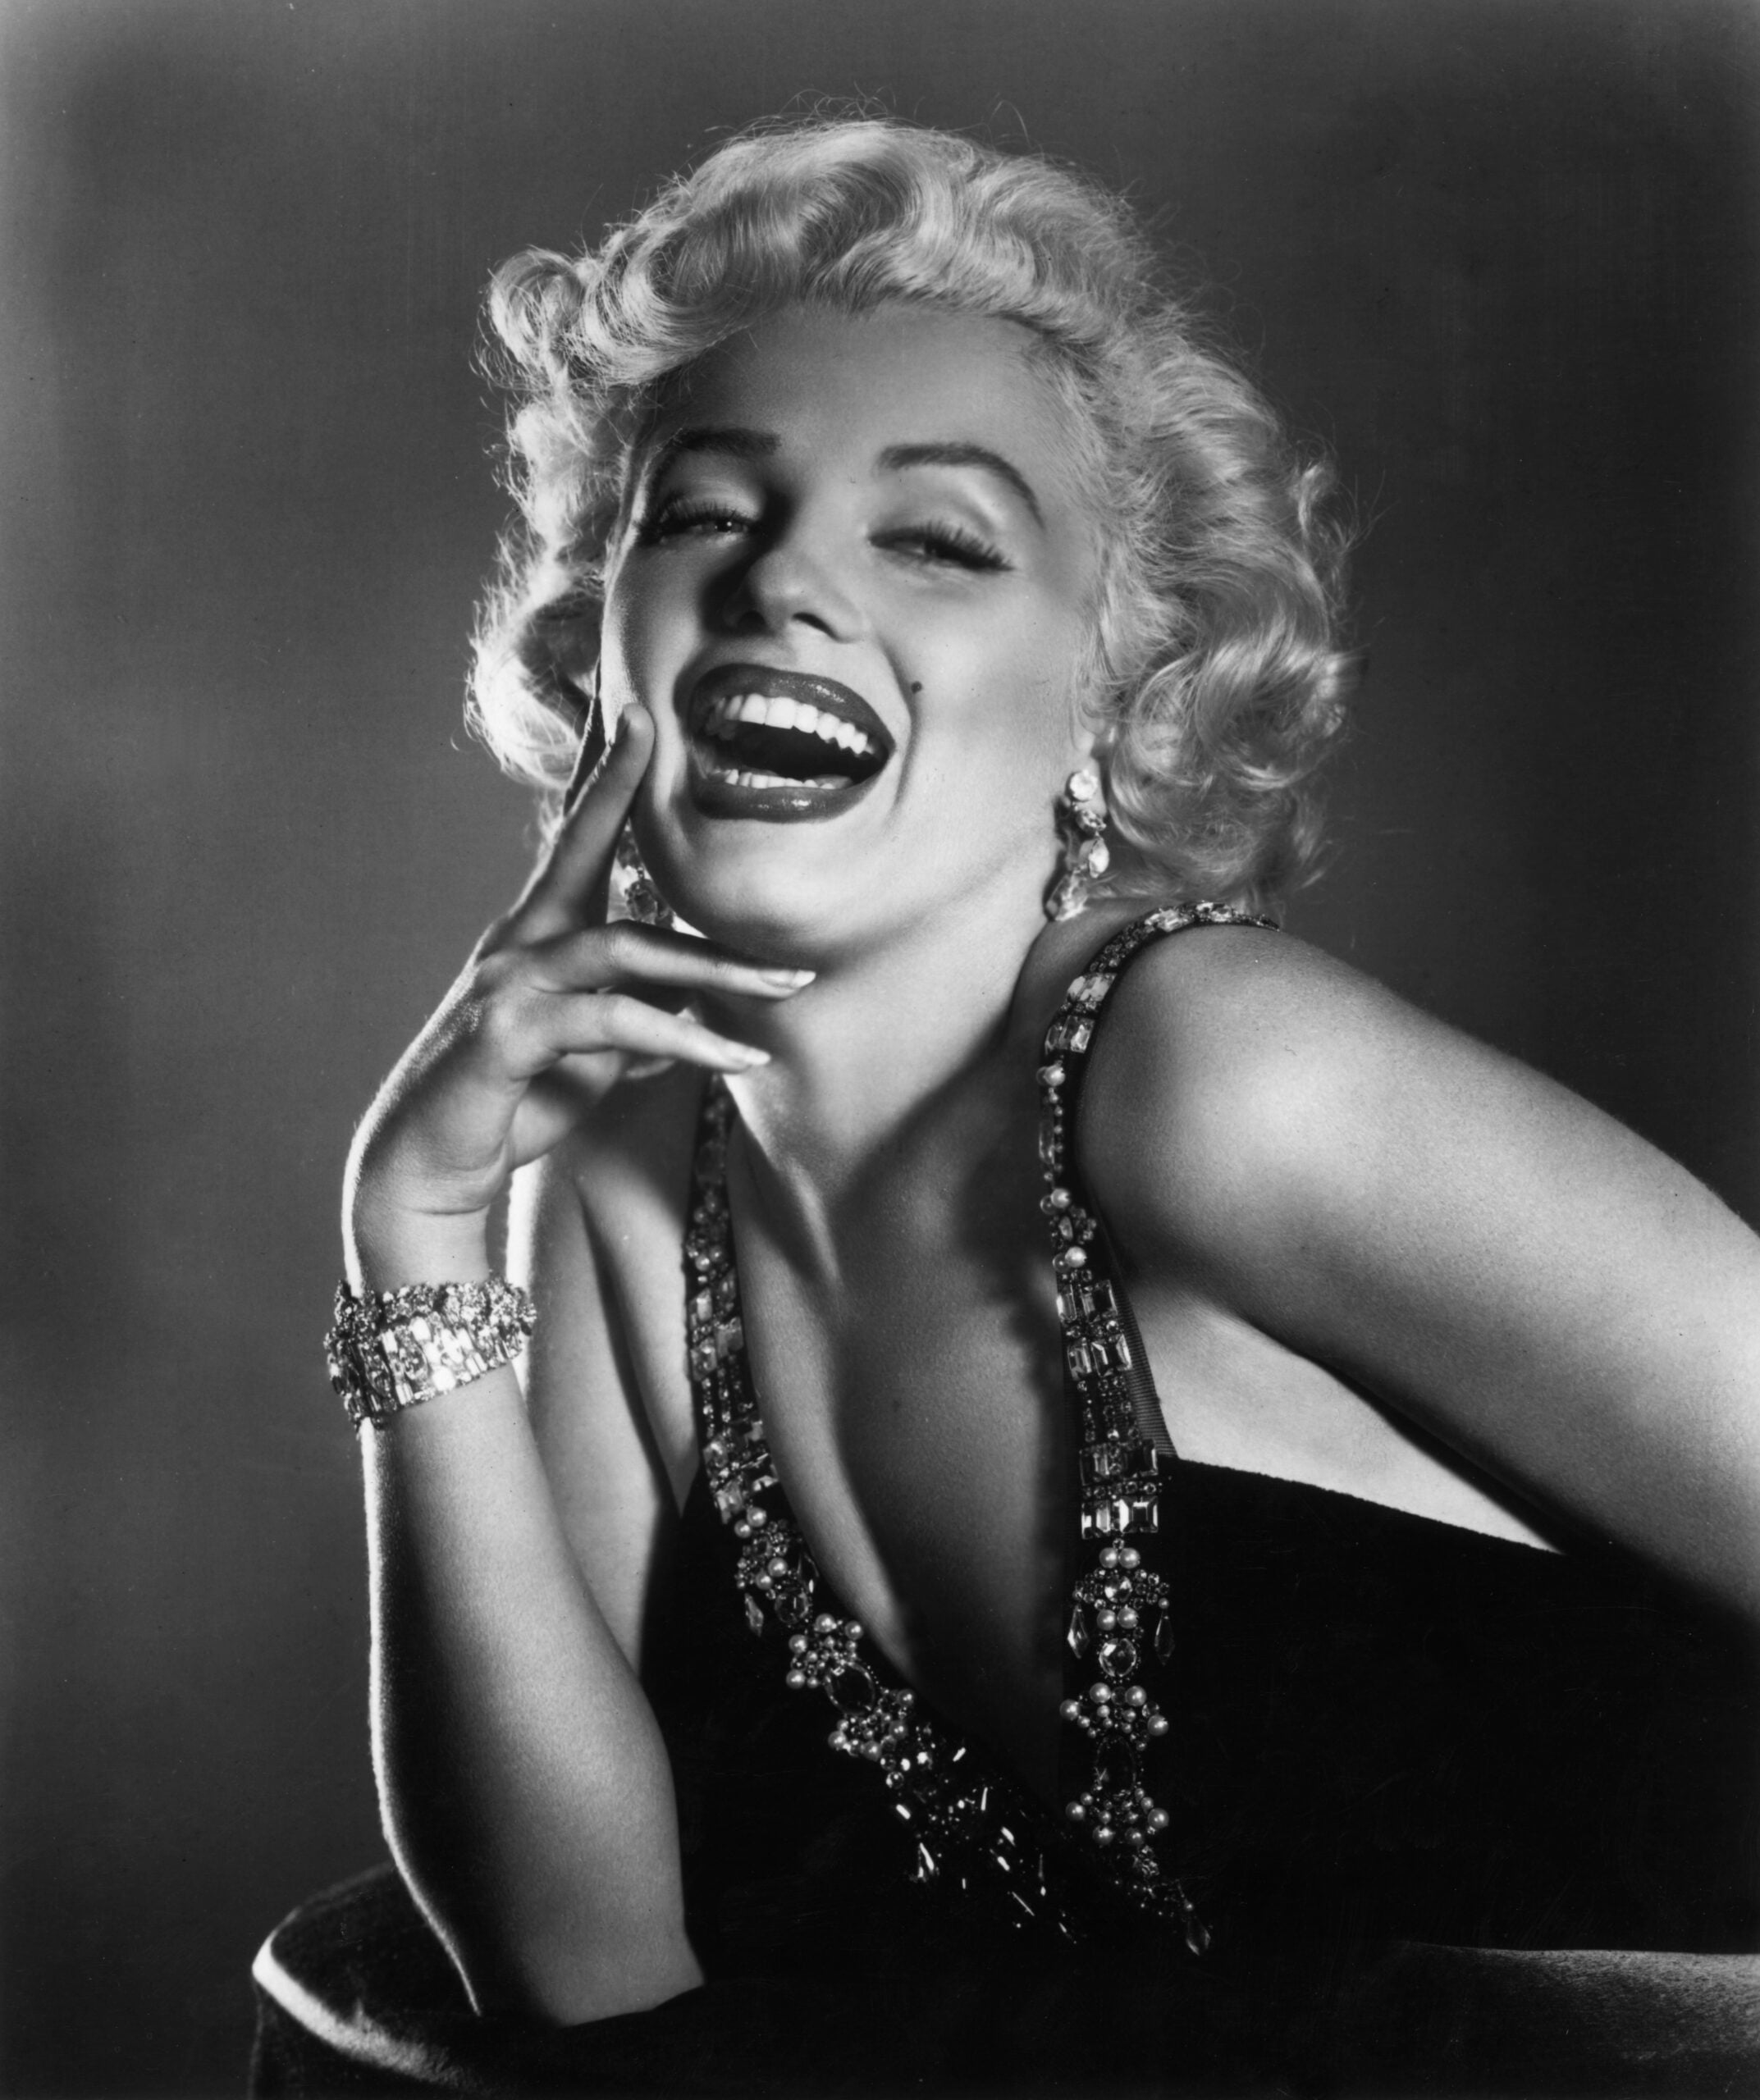 Marilyn Monroe personal brand